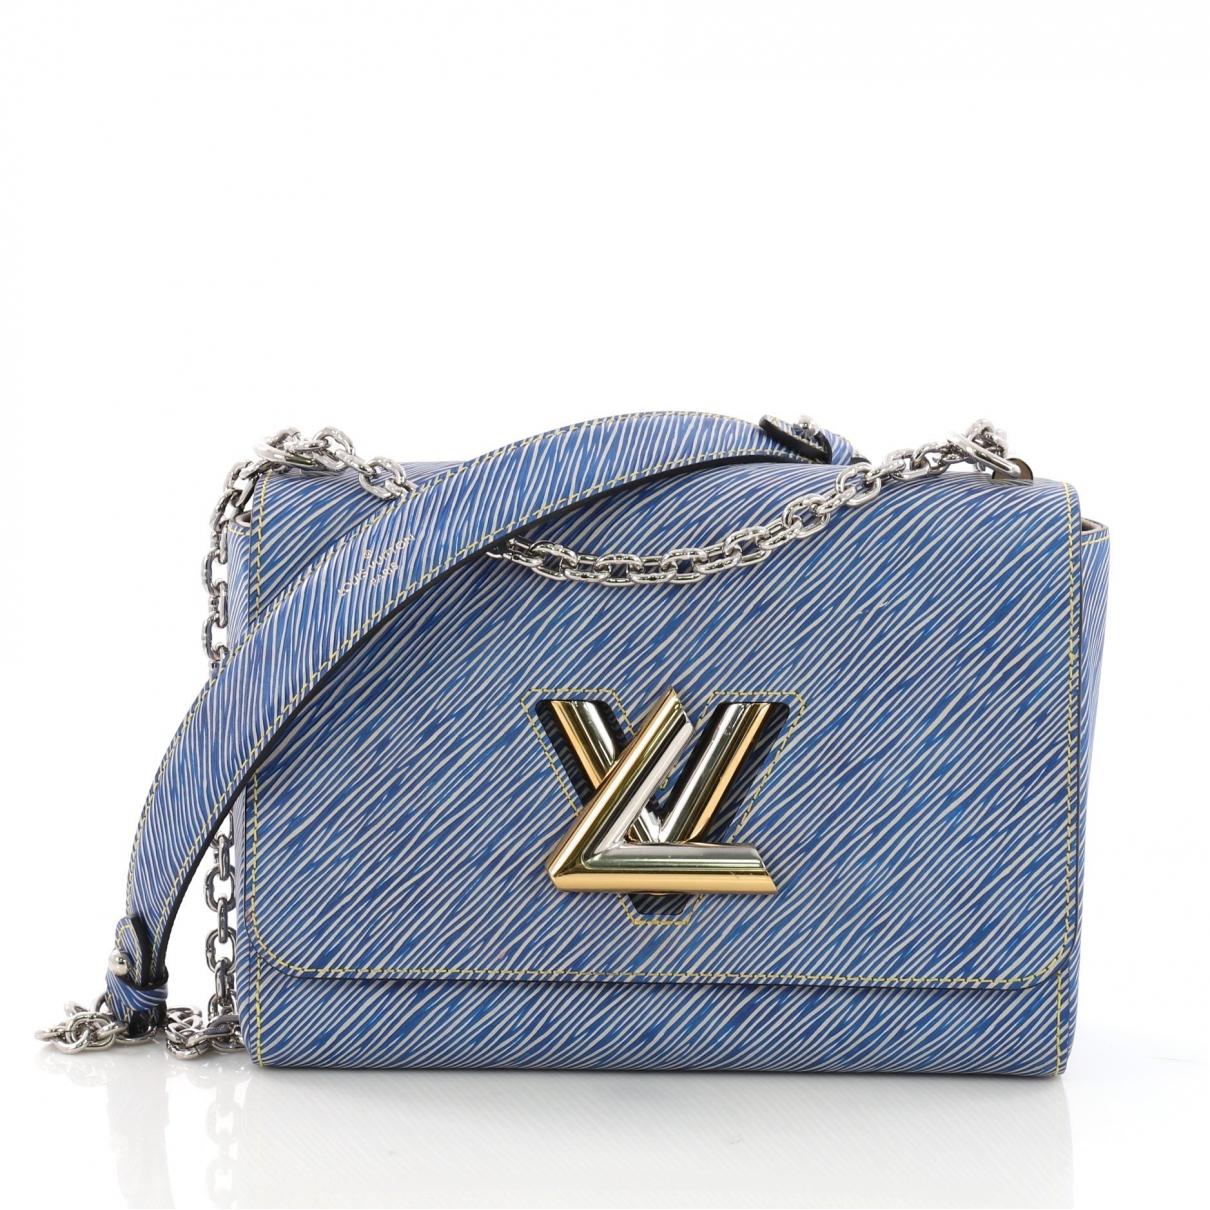 Lyst - Louis Vuitton Twist Blue Leather Handbag in Blue